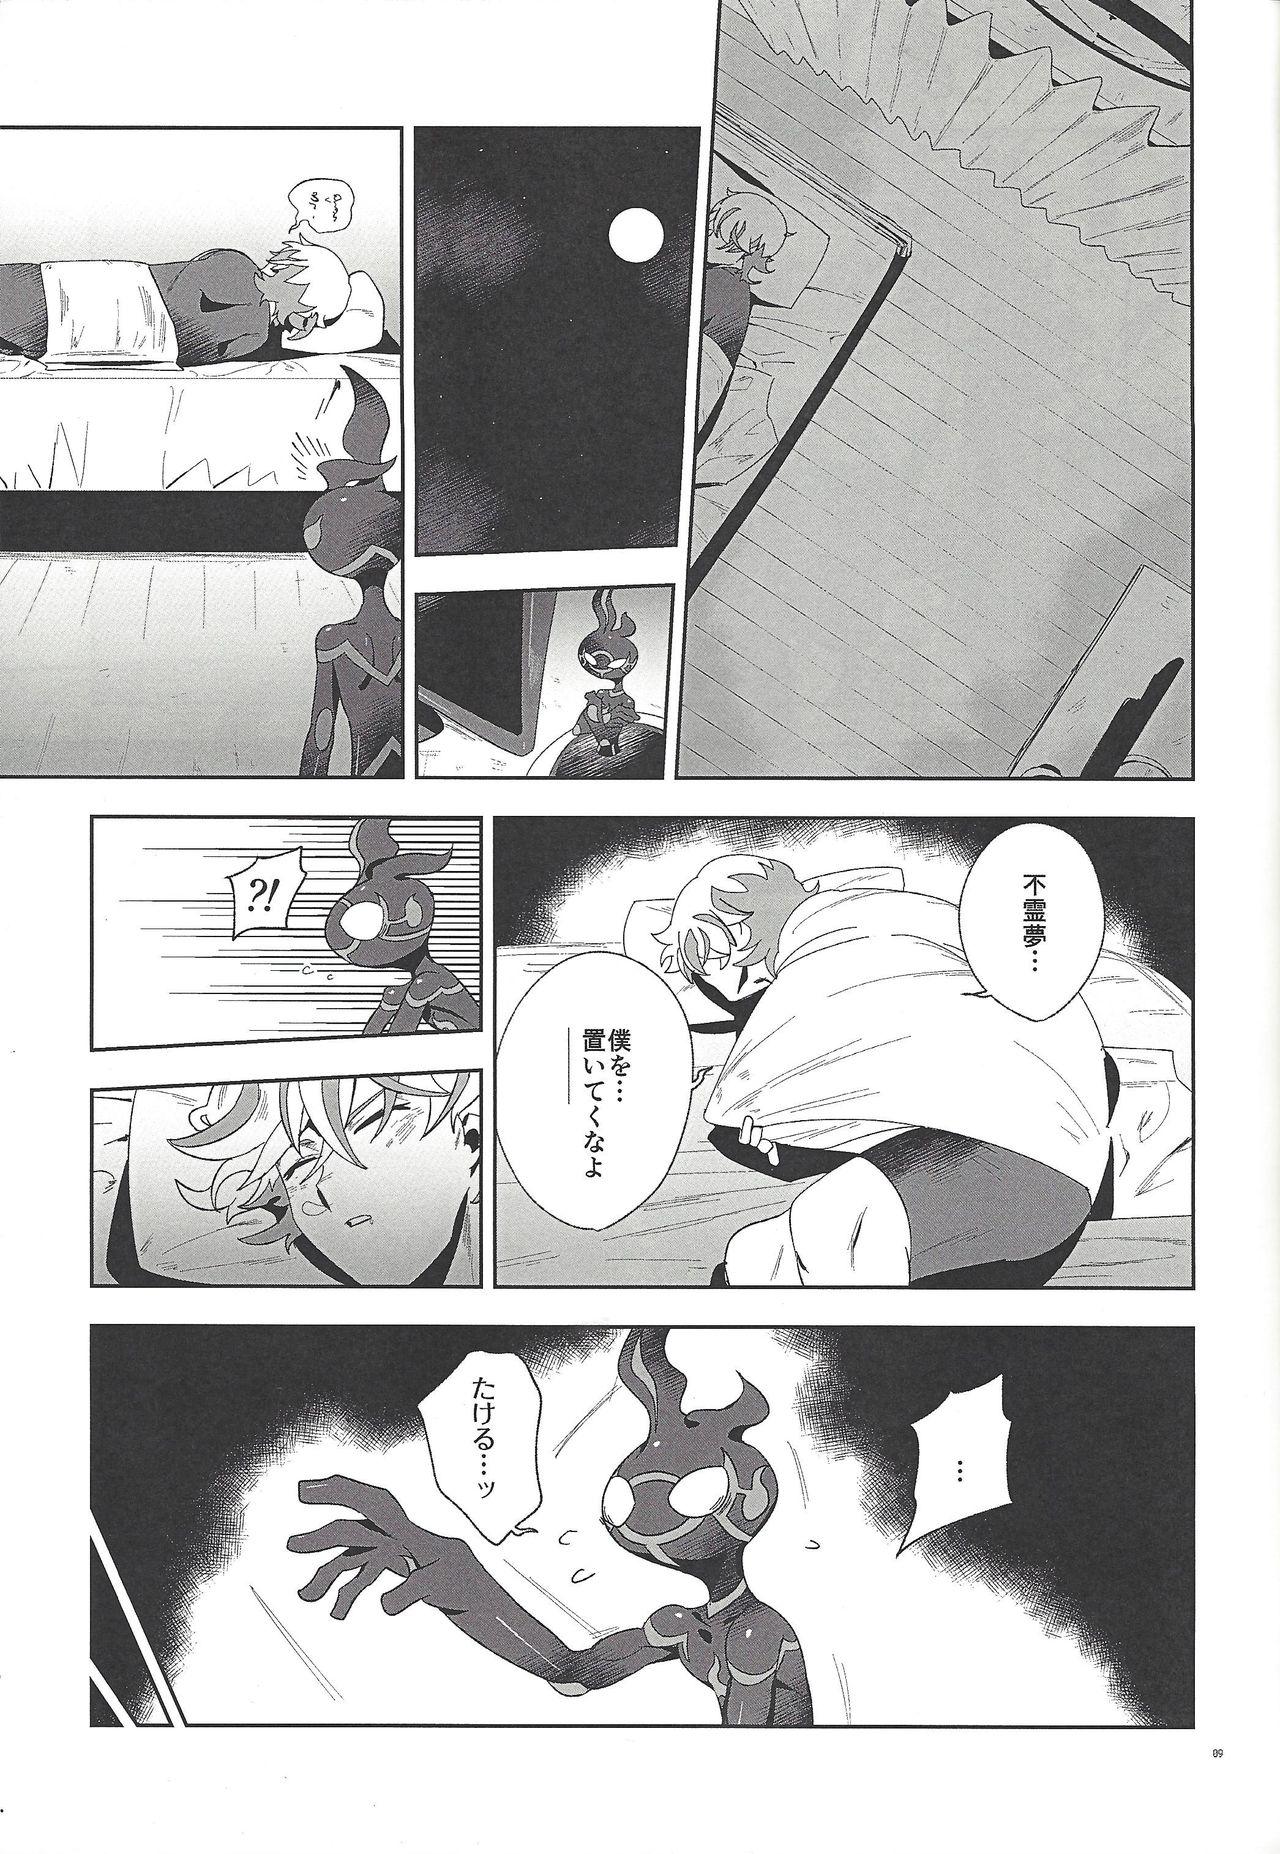 Scene Shin'ainaru waga aiboe. - Yu-gi-oh vrains Stockings - Page 8